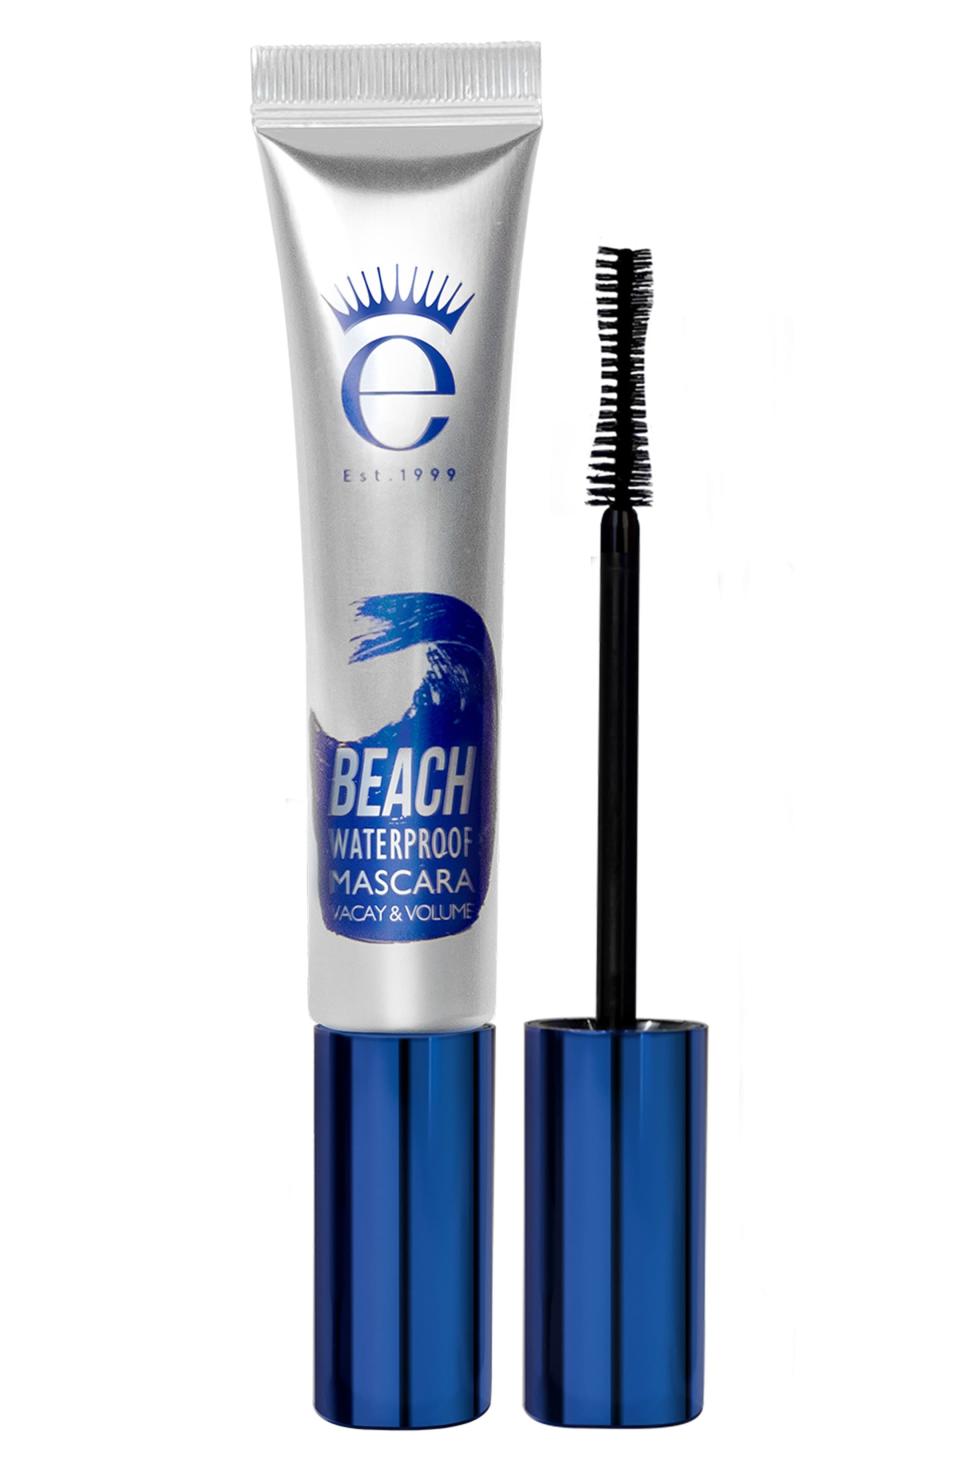 6) EYEKO Beach Waterproof Mascara